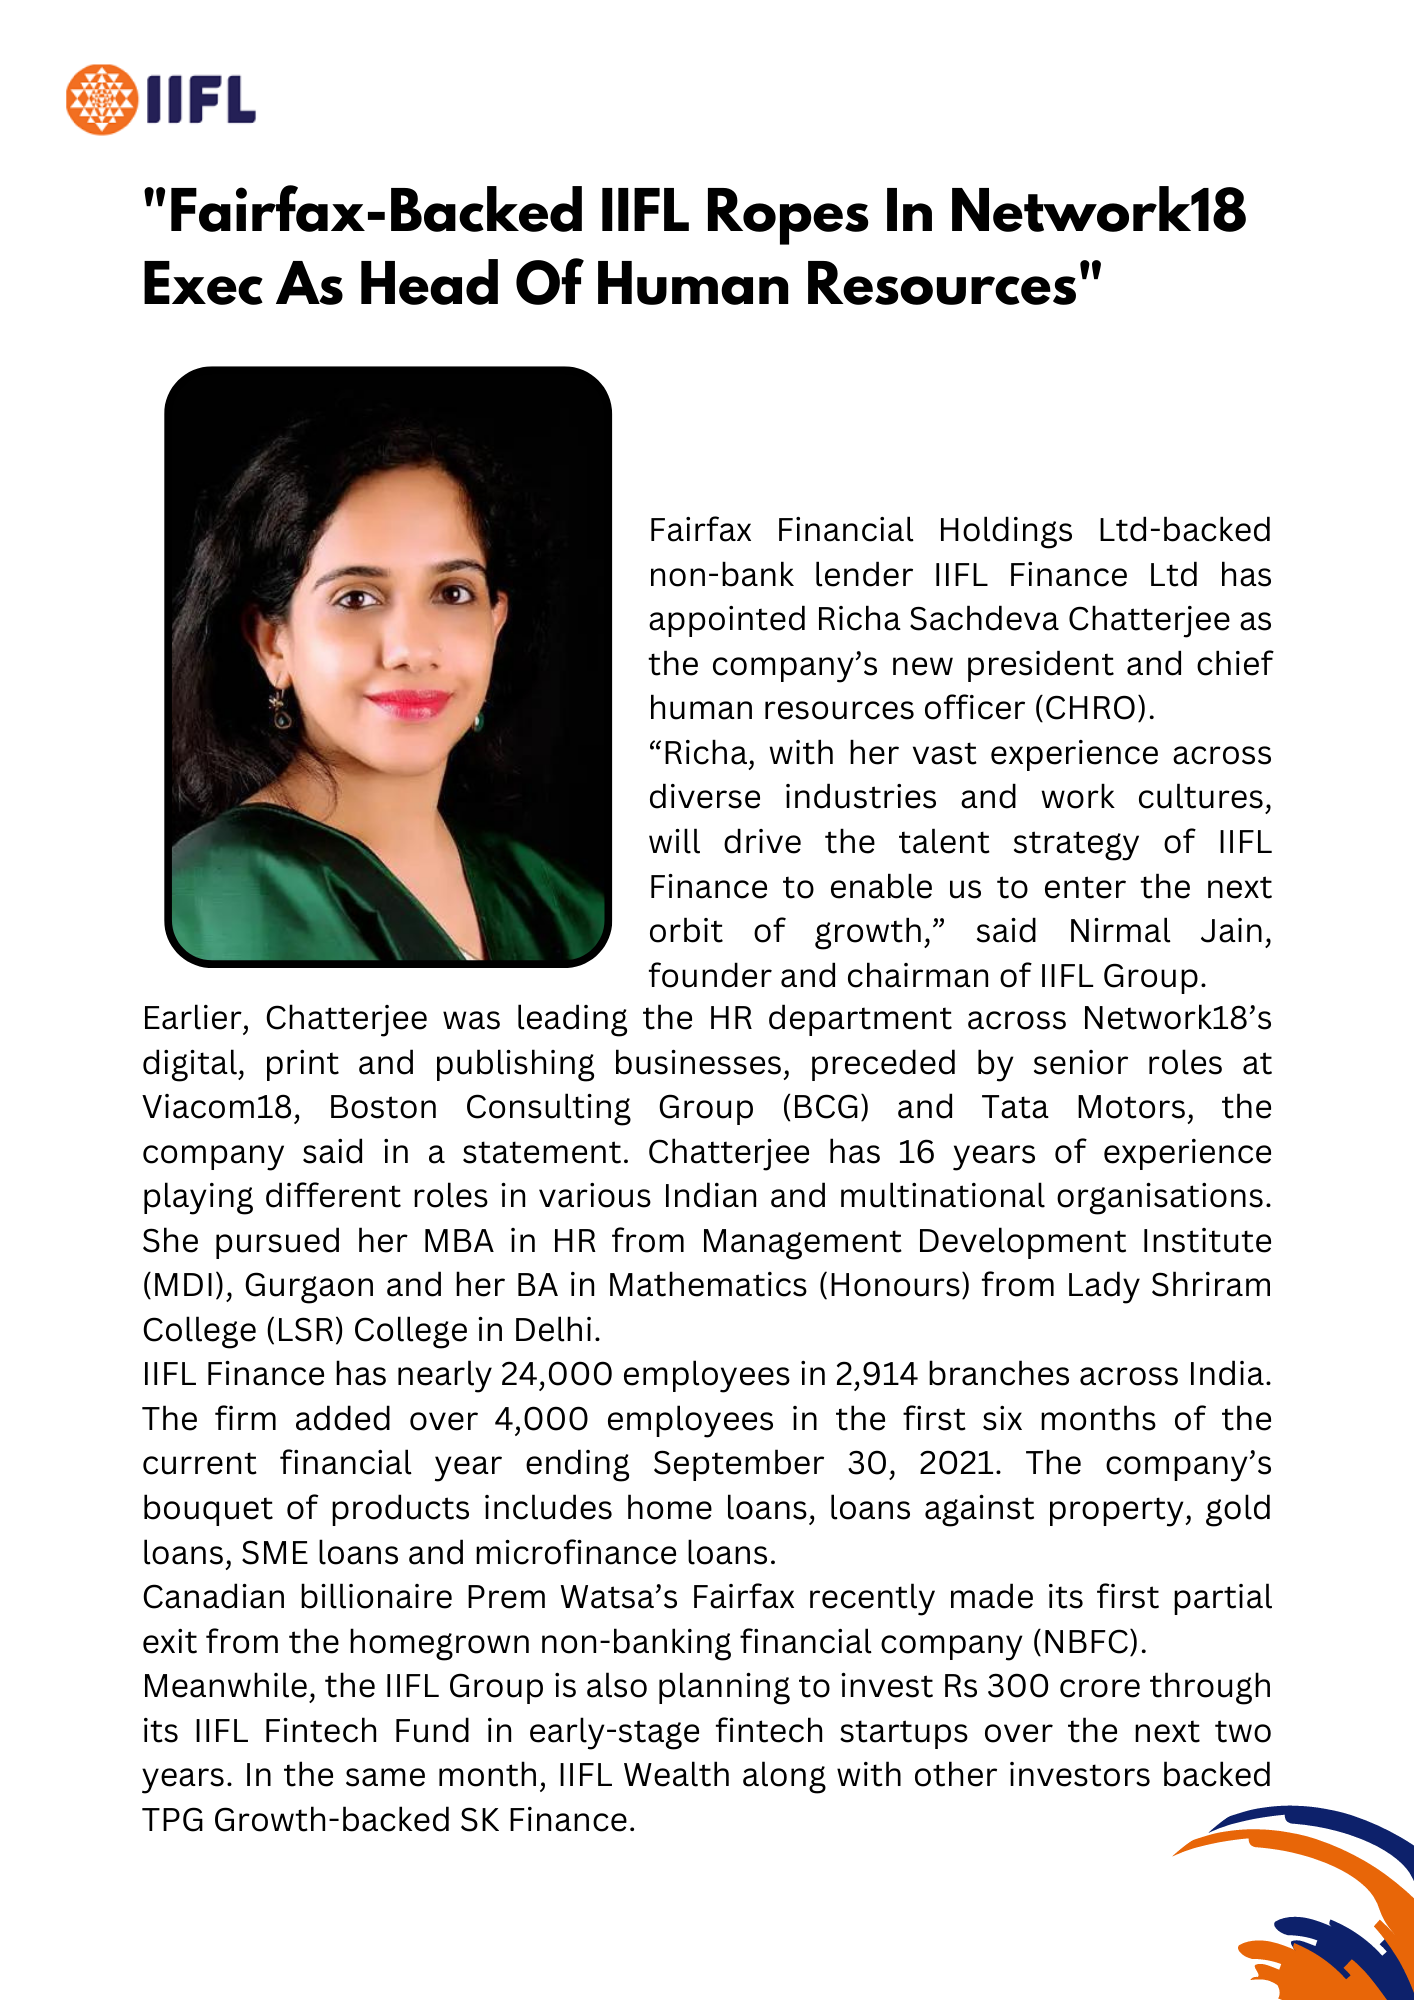 IIFL Finance Appoints Richa Sachdeva Chatterjee As Head Of Human Resources